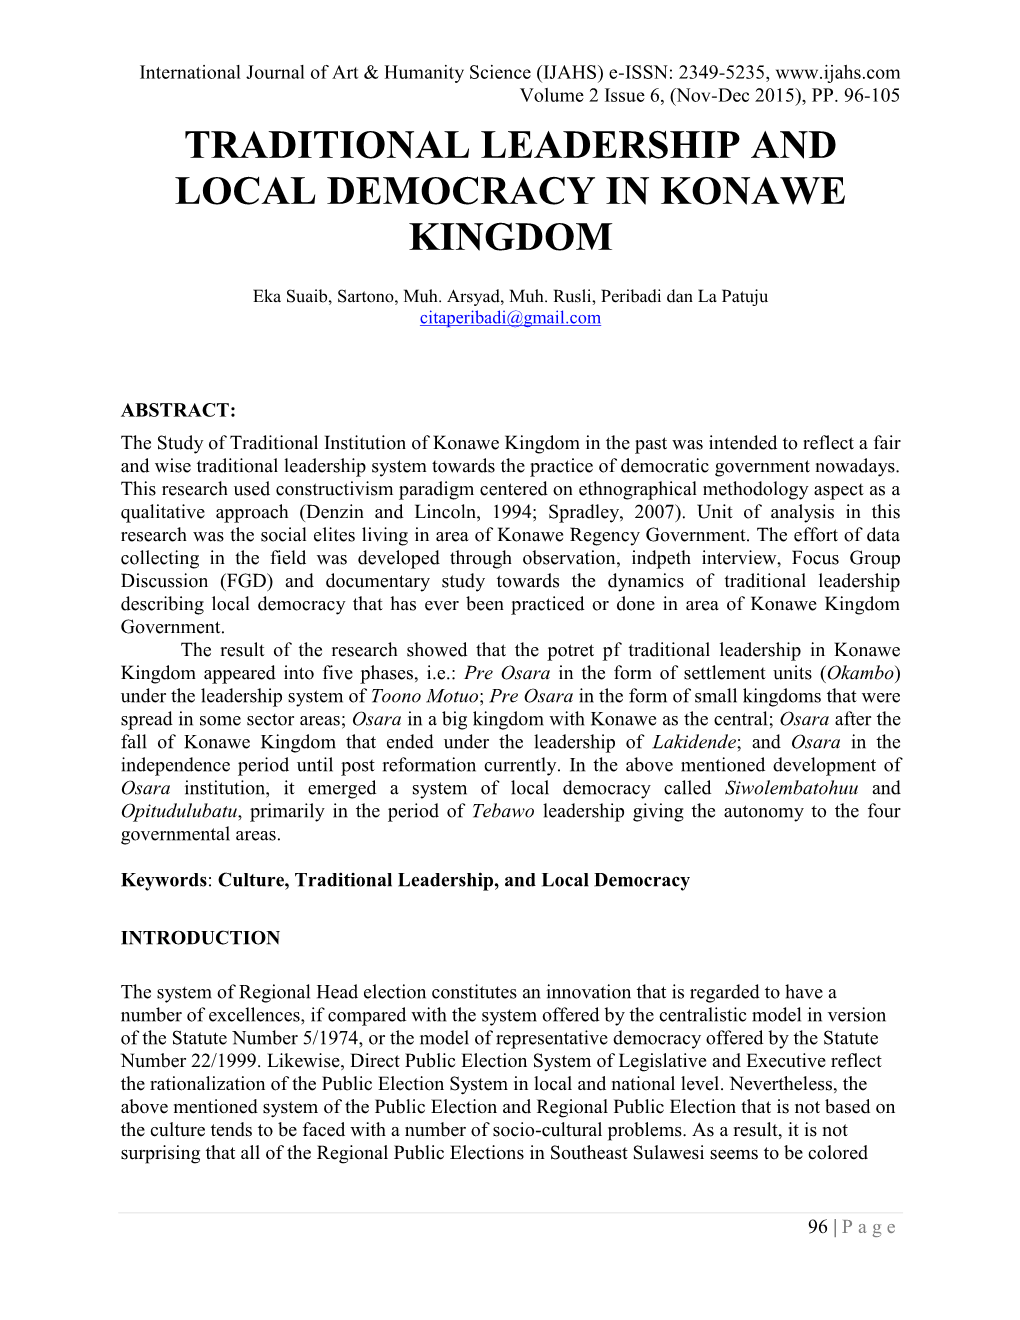 Traditional Leadership and Local Democracy in Konawe Kingdom